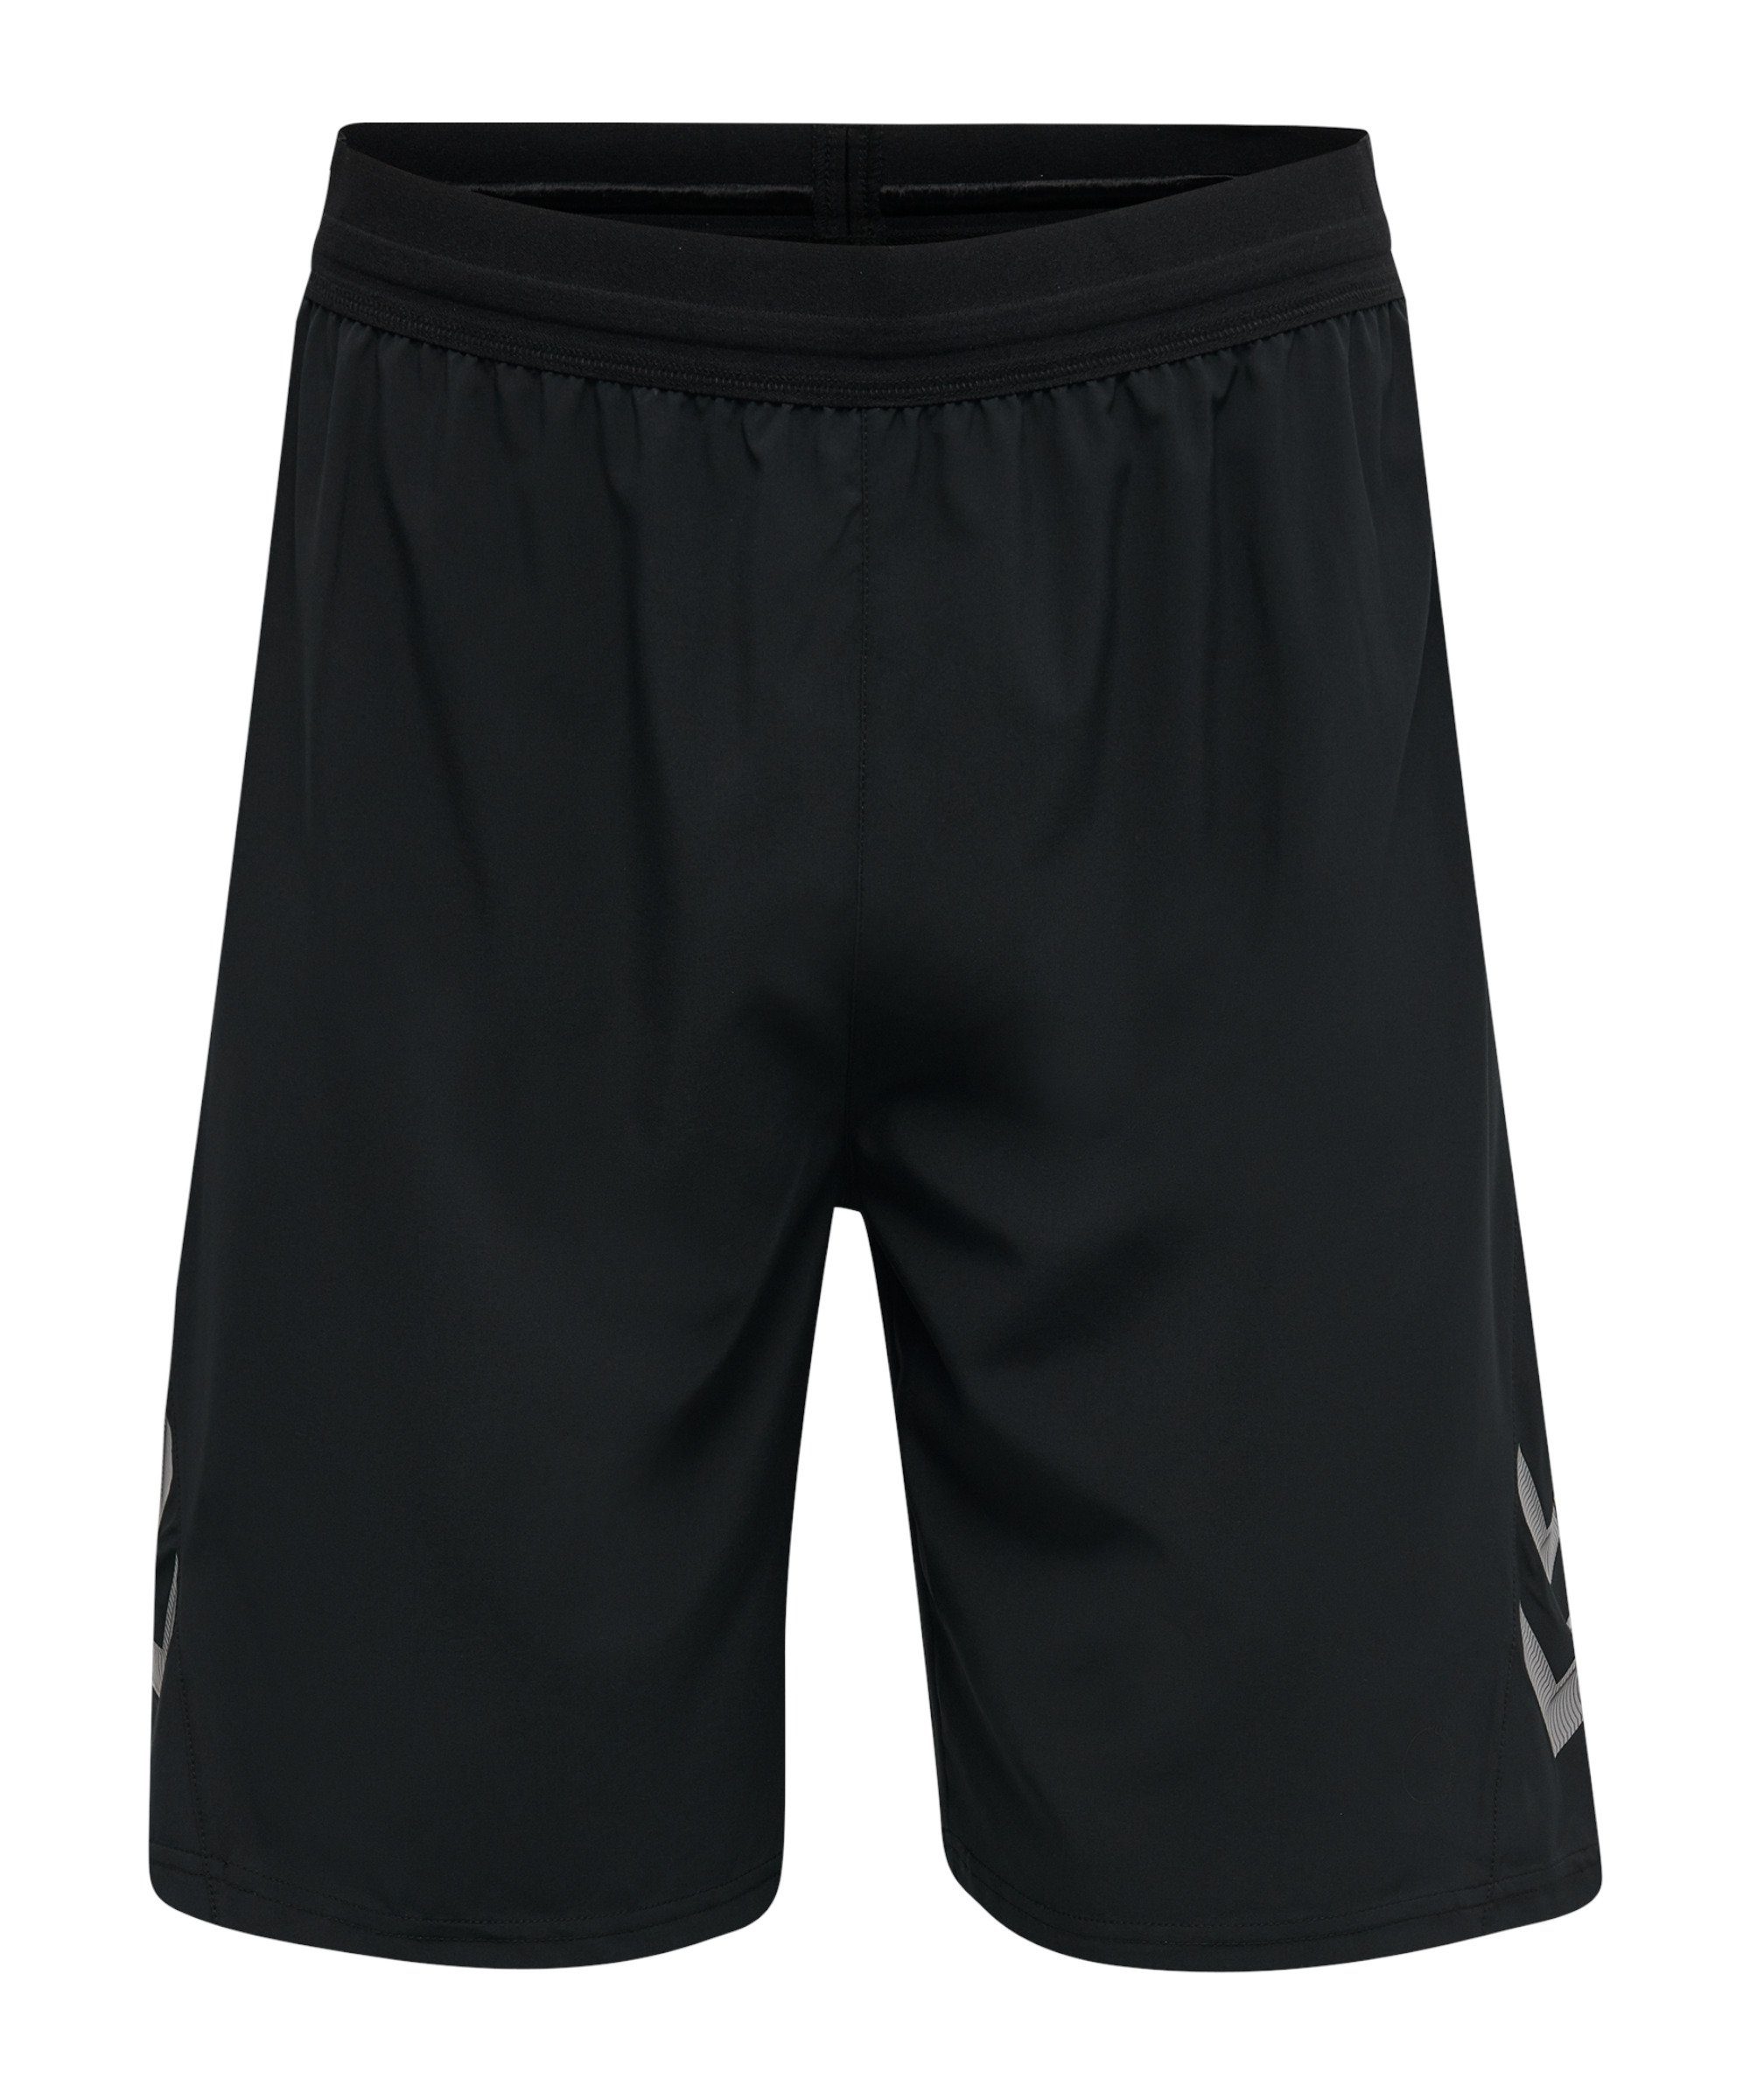 hummel Shorts hmlLEAD schwarz Sporthose Pro